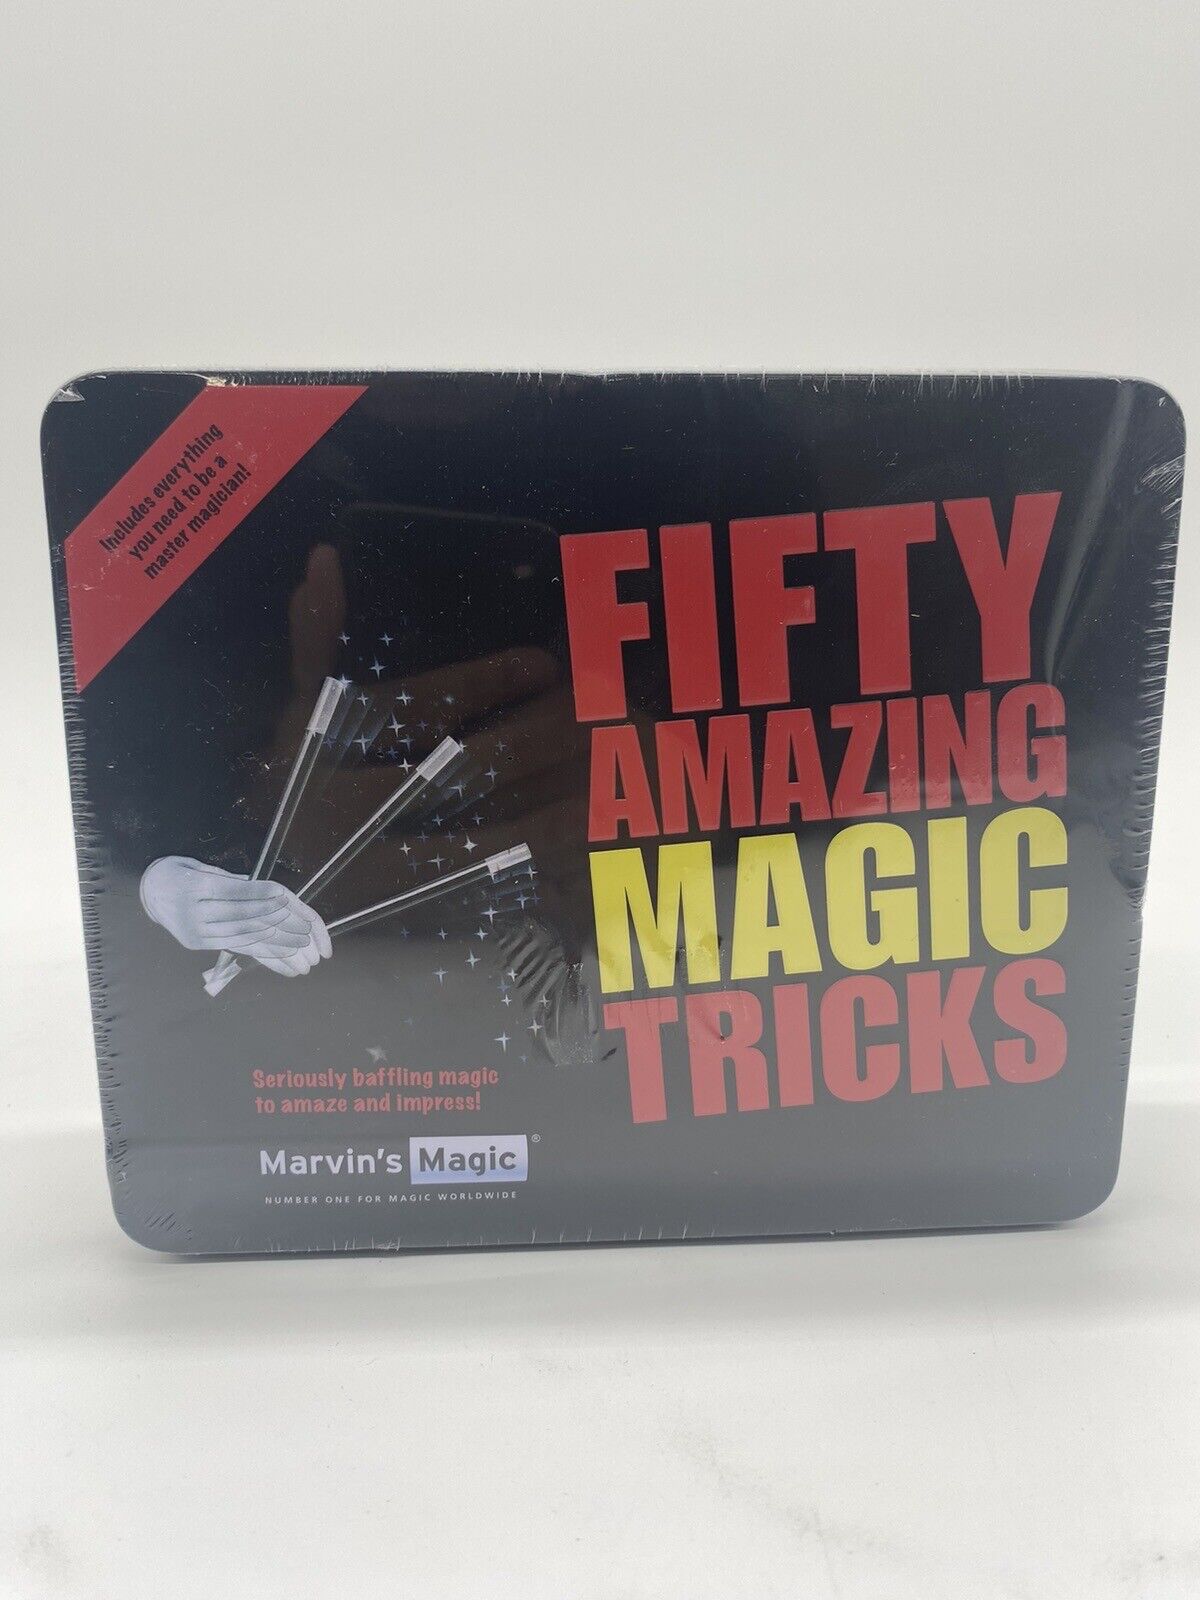 Marvin's Magic - Fifty Amazing Magic Tricks |  Amazing Magic Tricks for Kids NEW